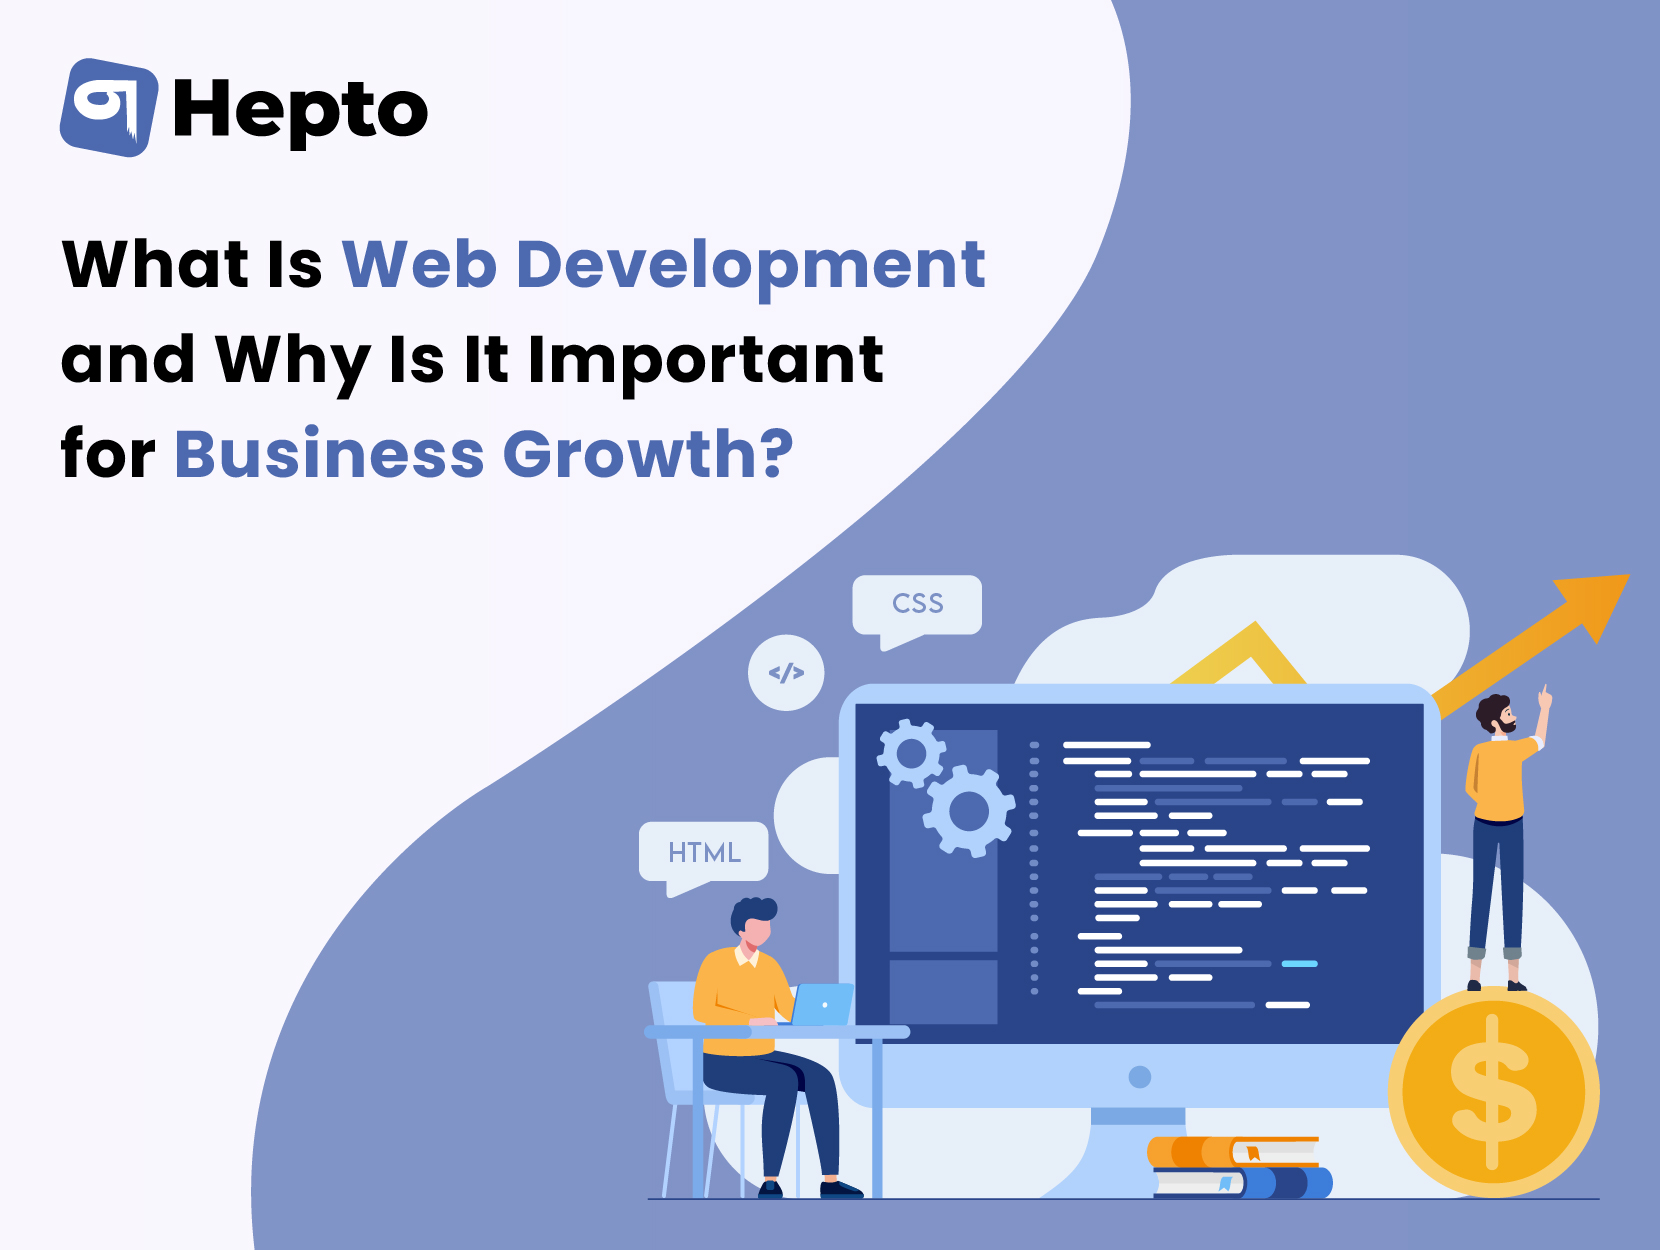 Benefits of Web Development